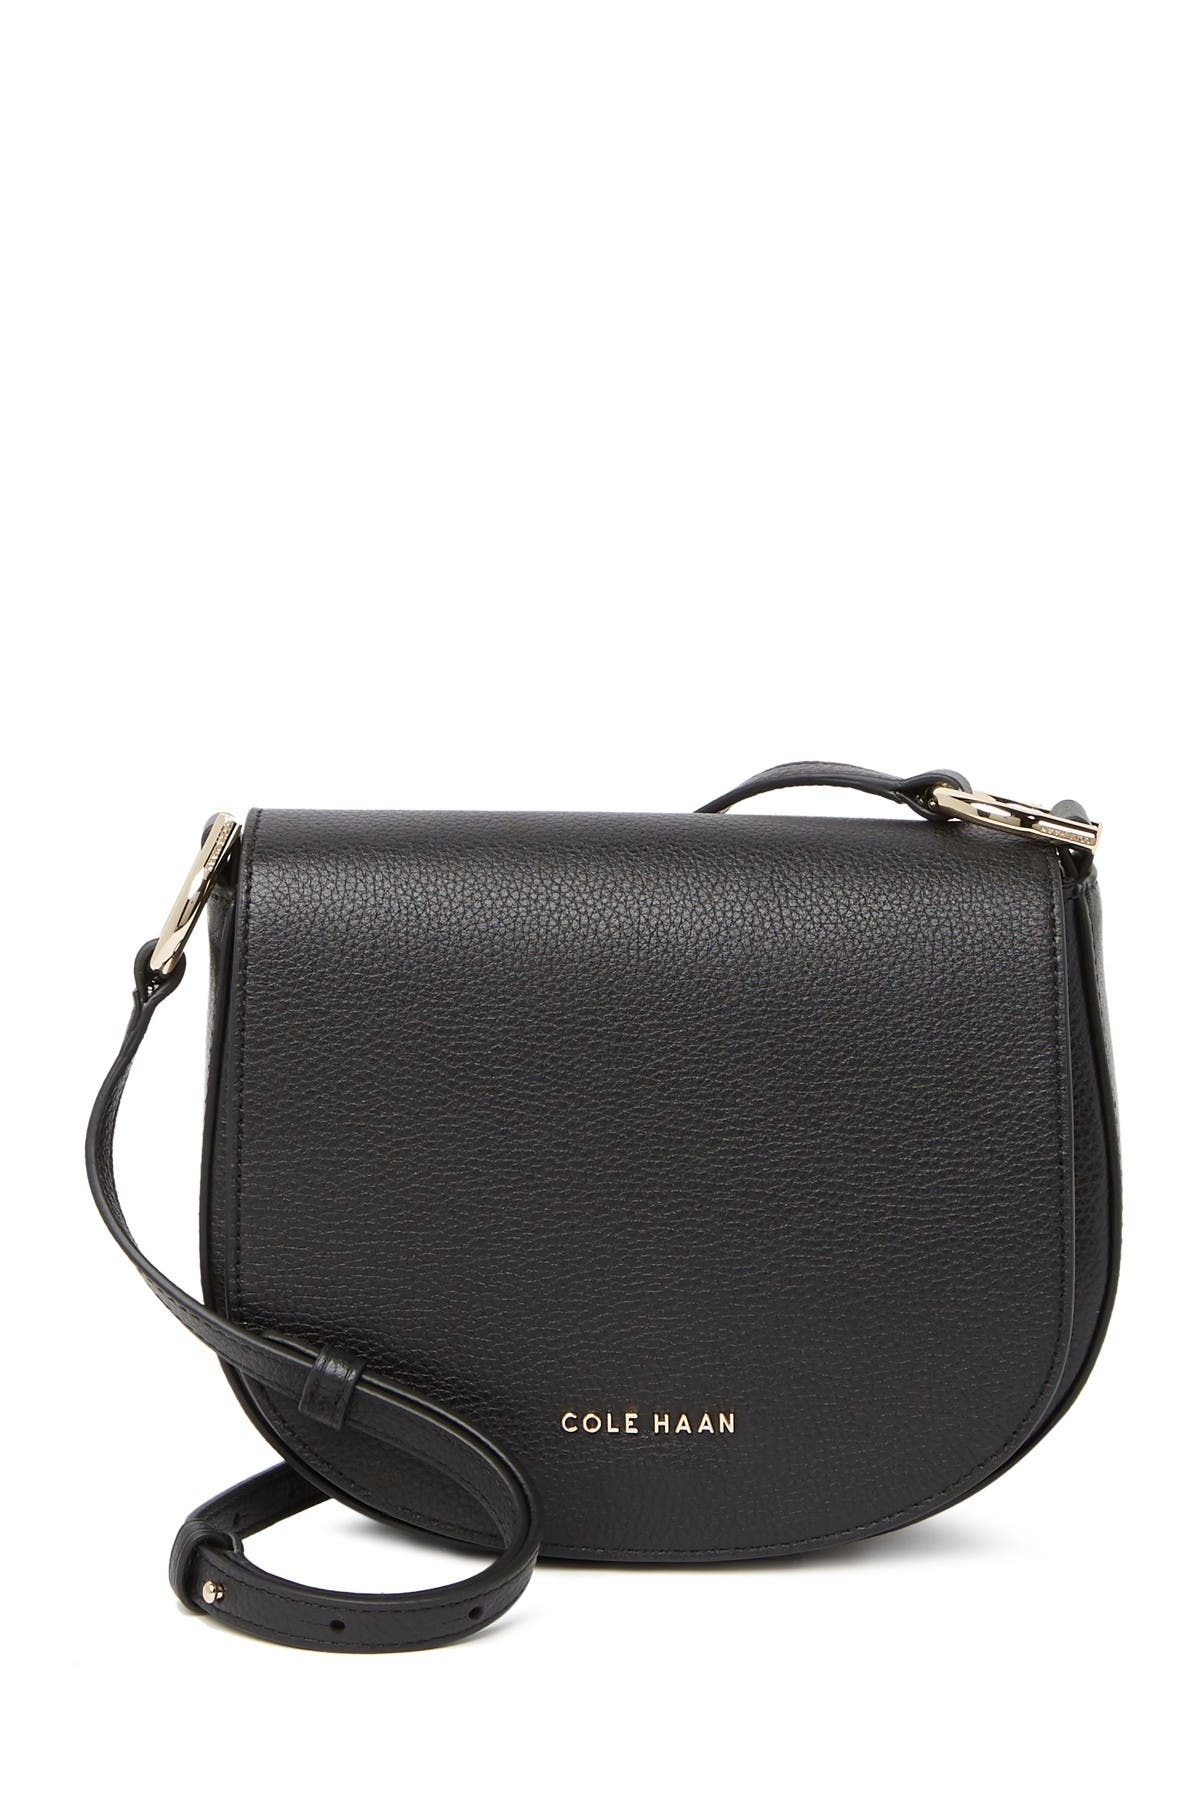 cole haan black crossbody bag